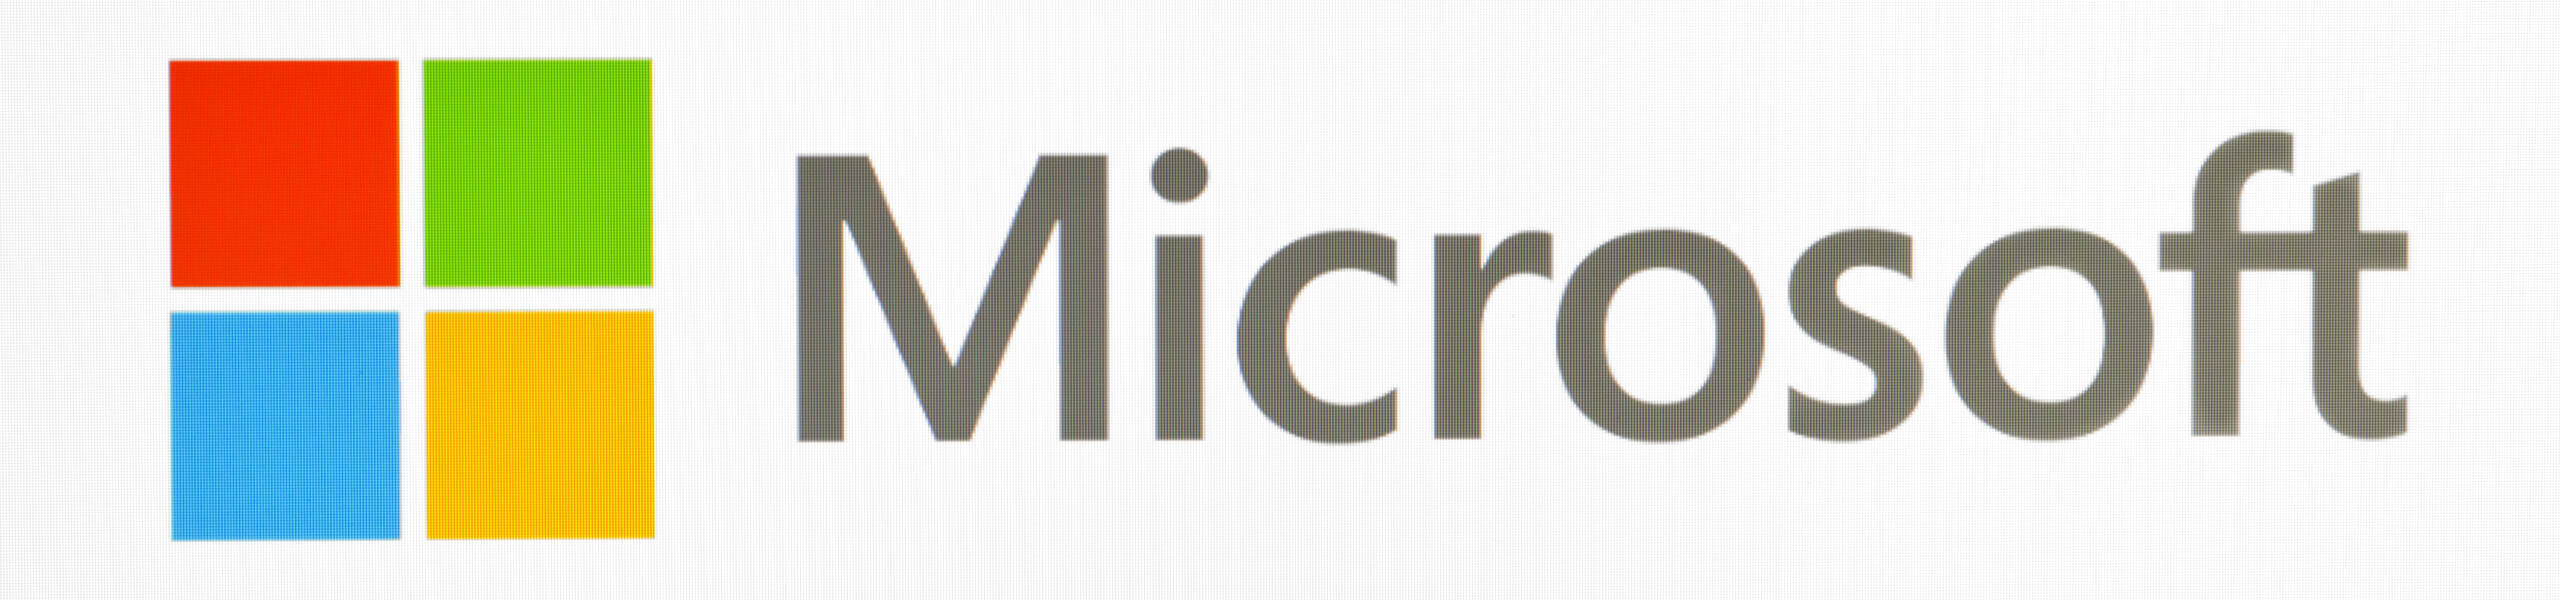 Microsoft hit record high